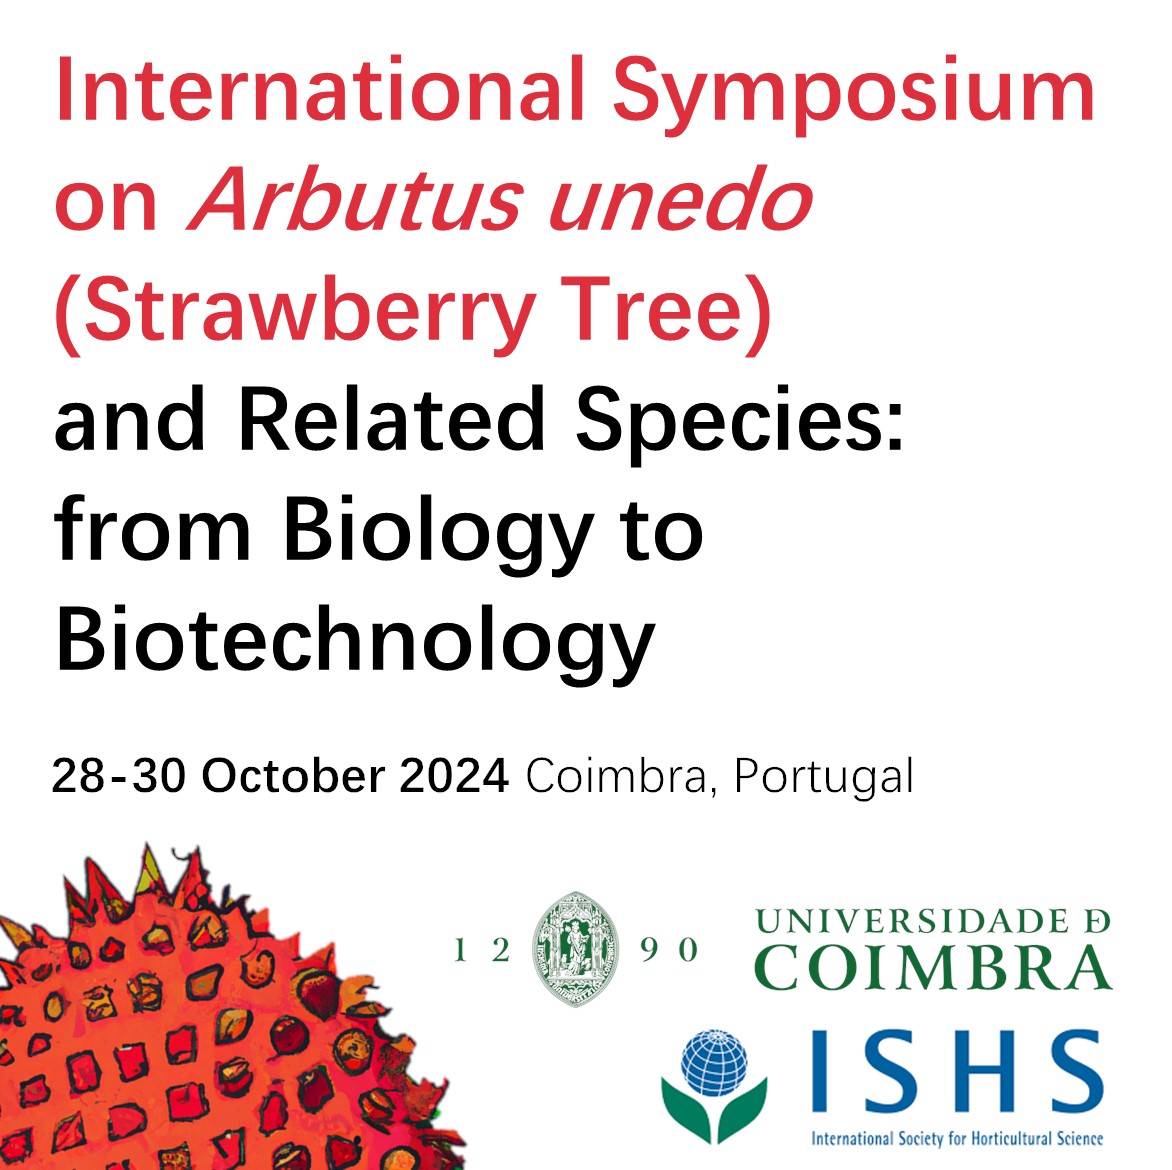 International Symposium on Arbutus unedo - Inscrio Geral